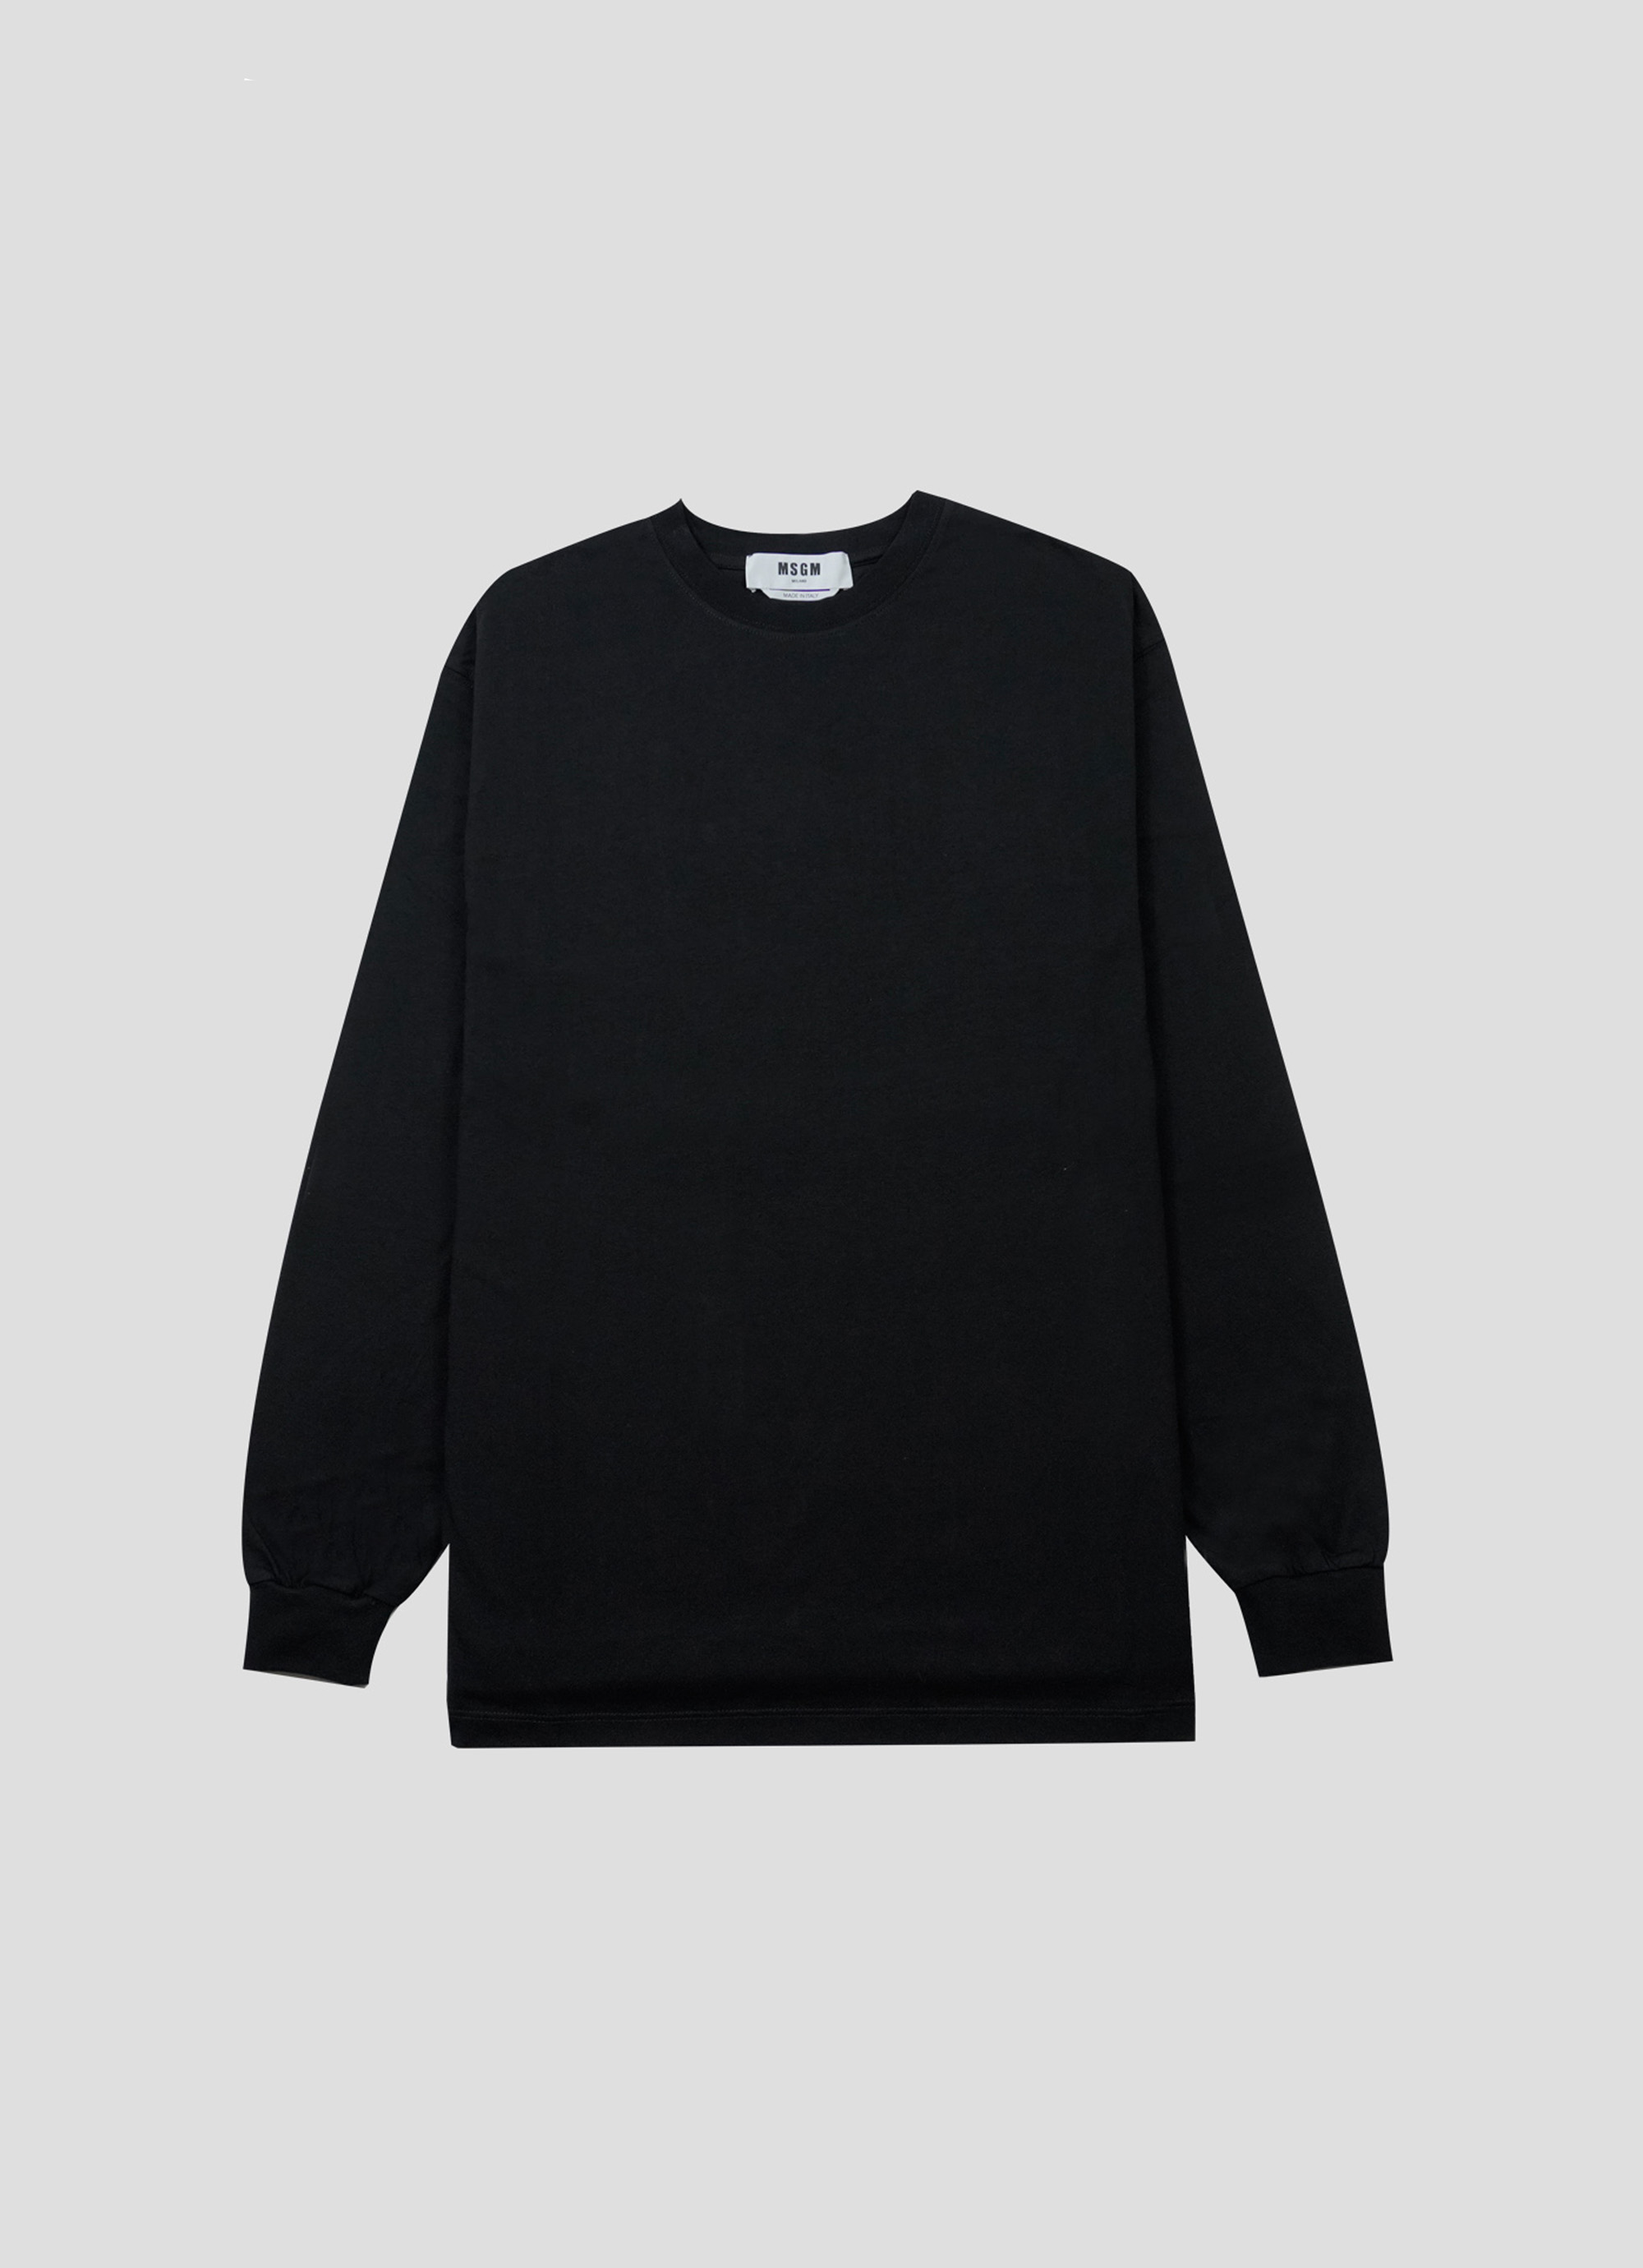 BACK FOIL LOGO Tシャツ【Japan Exclusive】 詳細画像 ブラック×ゴールド 1